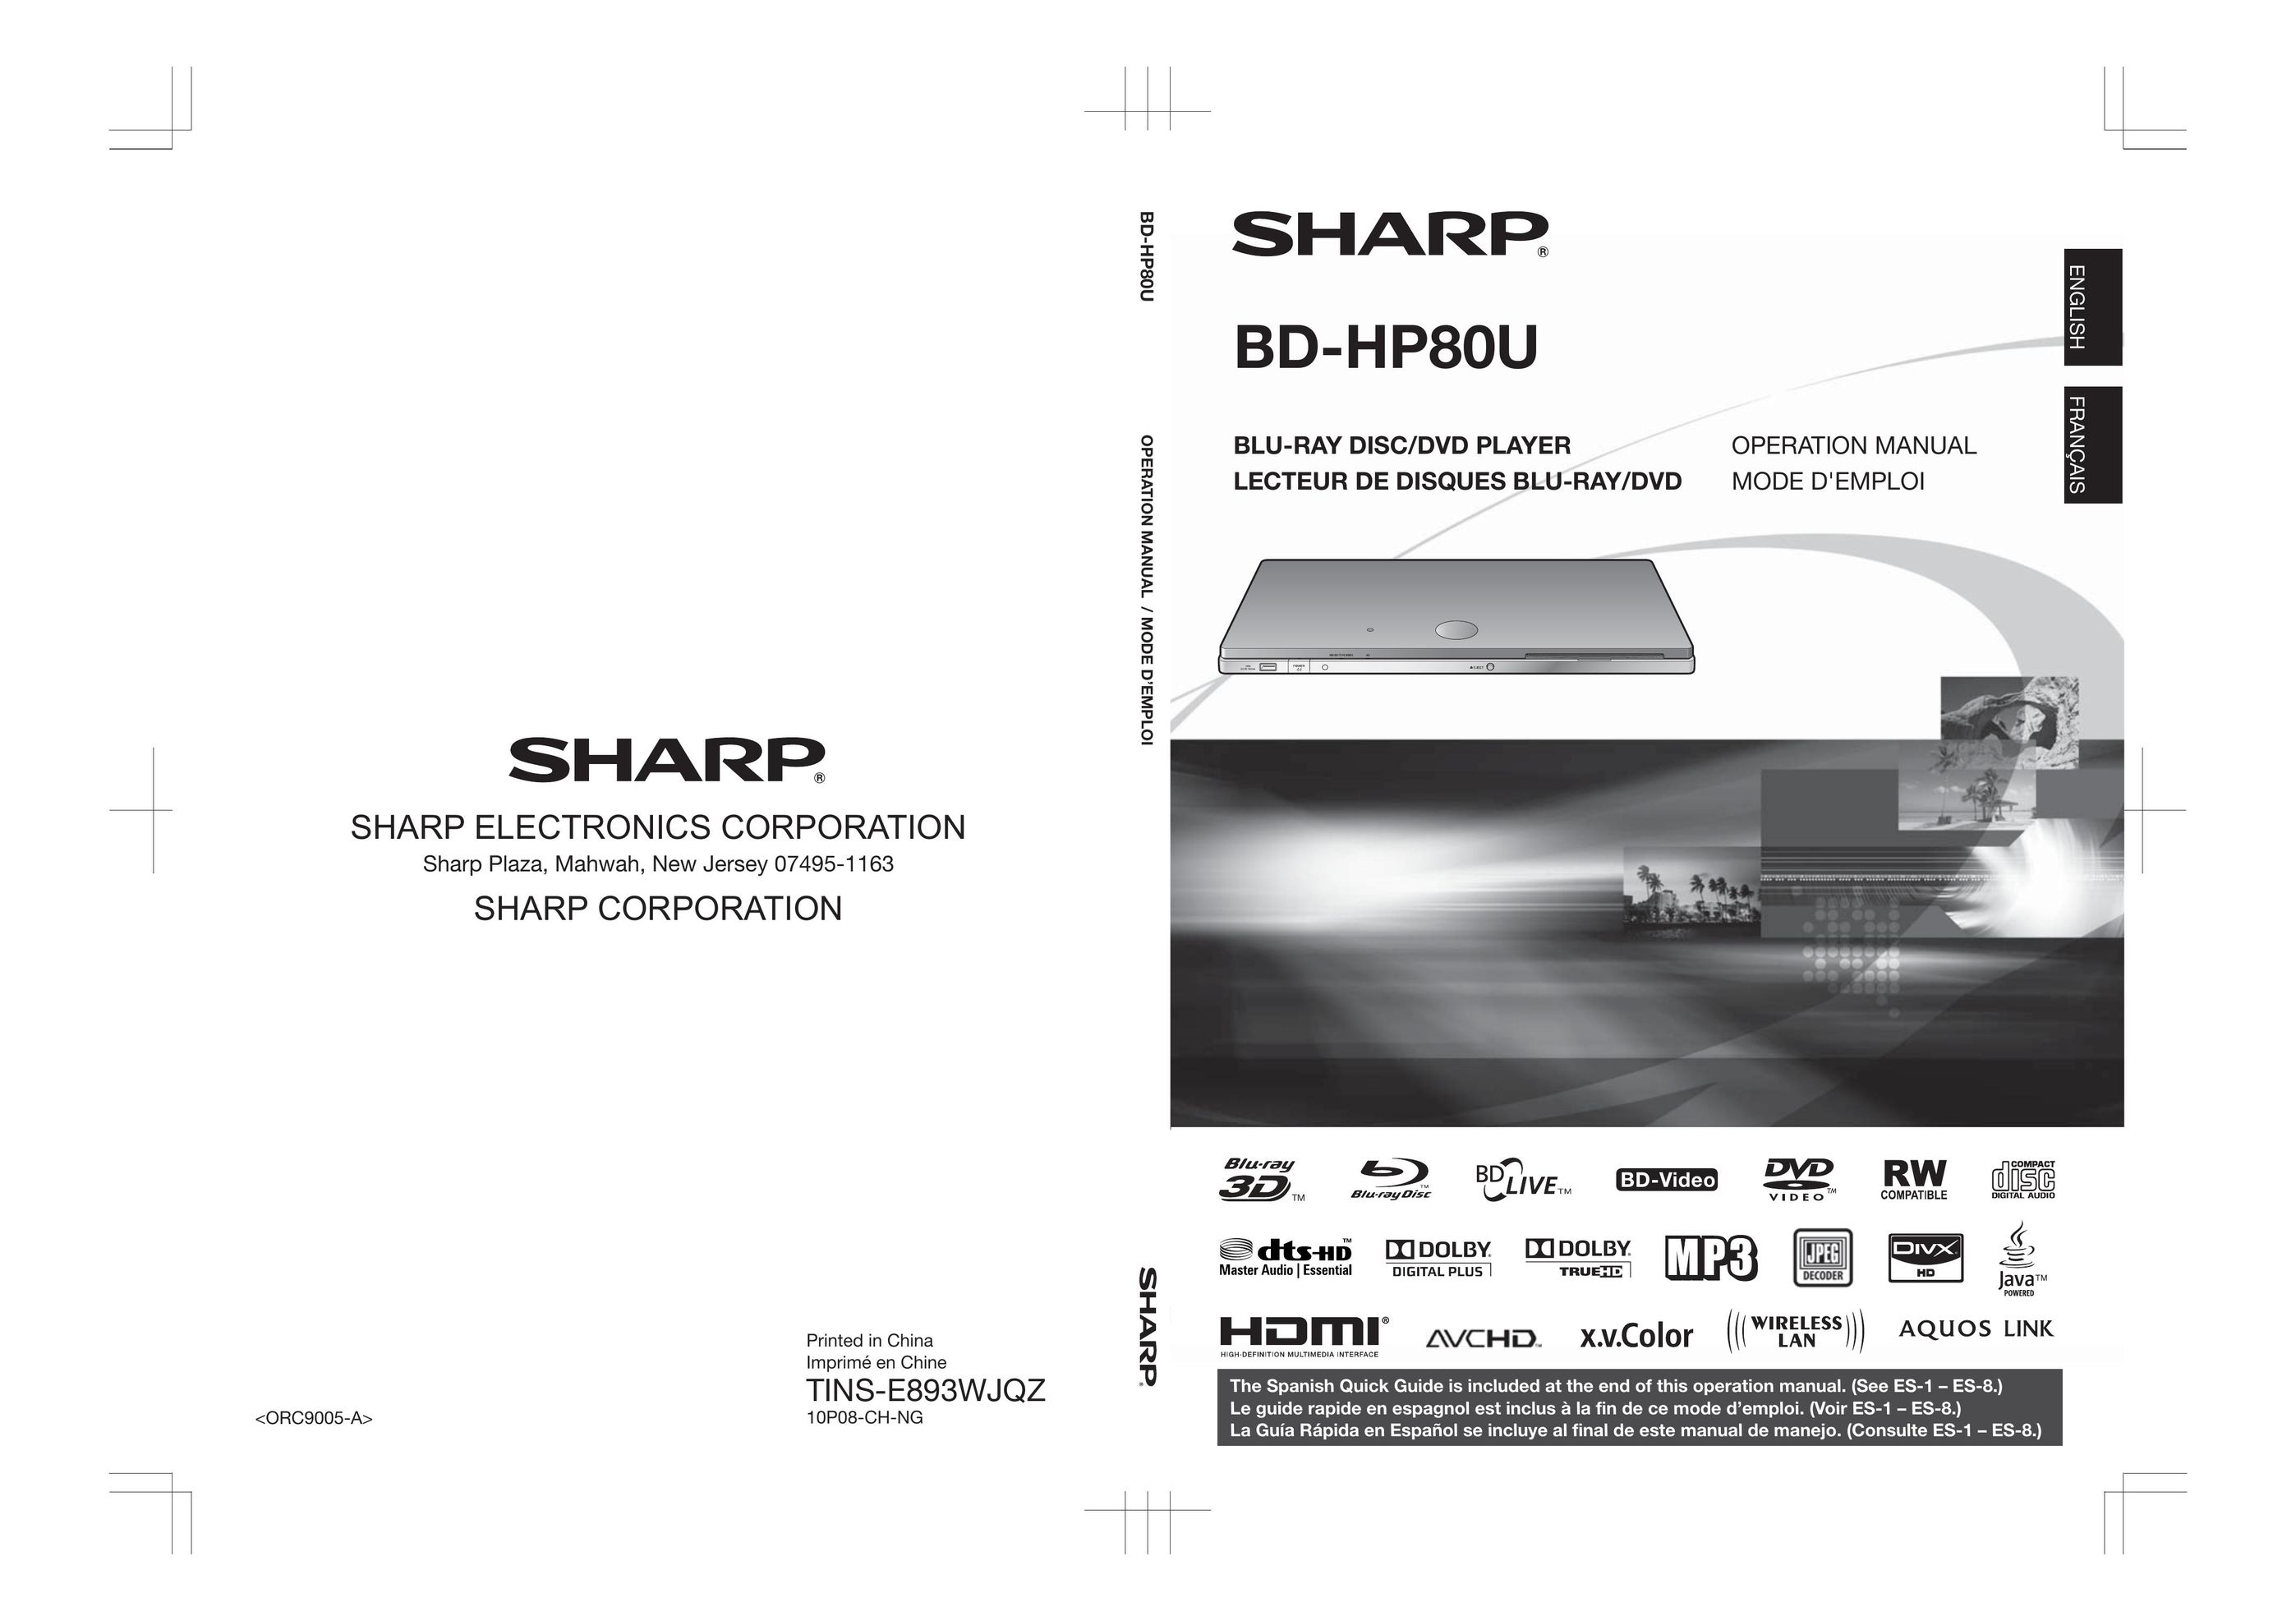 Sharp BD-HP80U Blu-ray Player User Manual